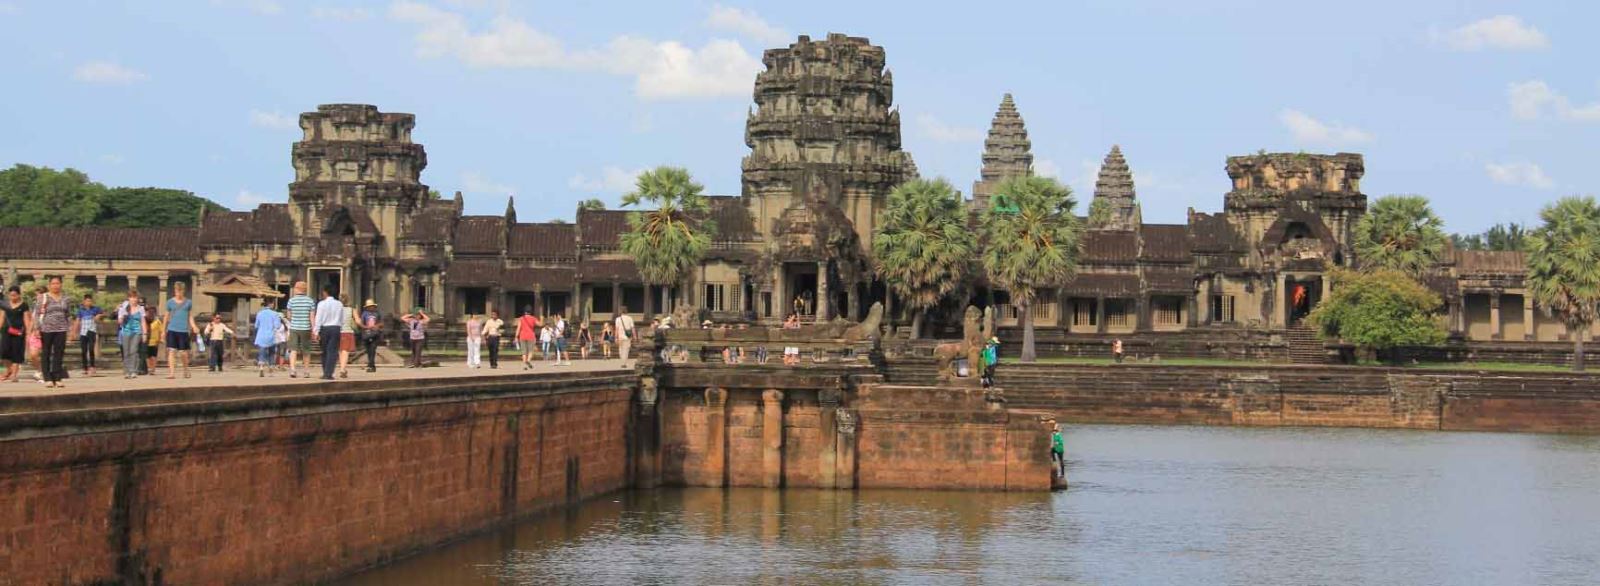 La città di Angkor 